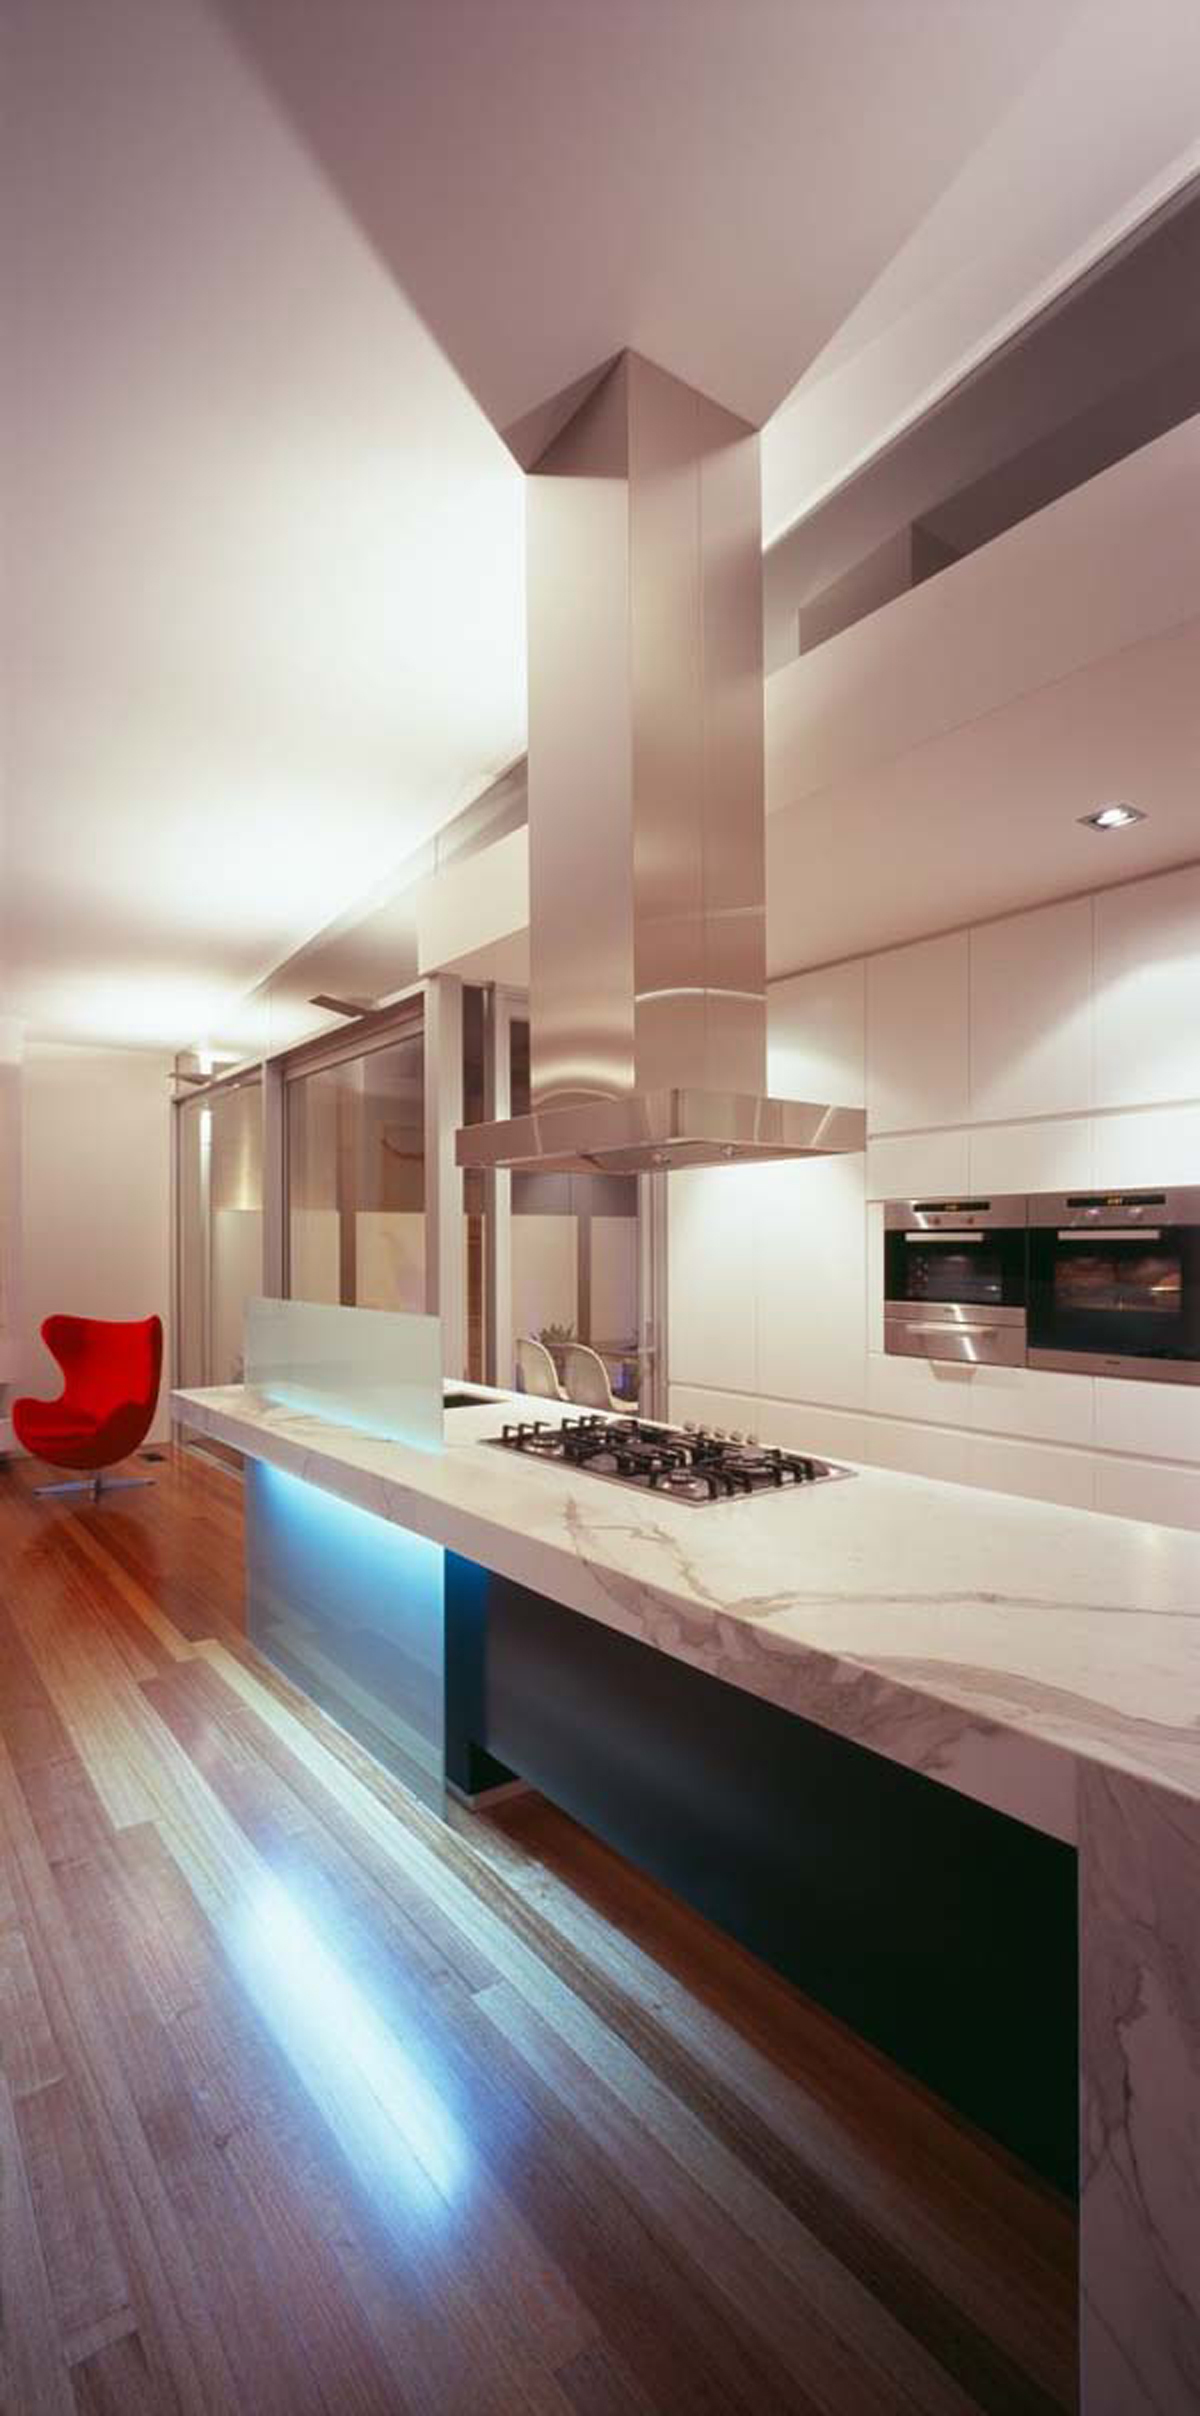 The Redmond Street Houses, Beautiful Symmetrical Construction Residence - Kitchen